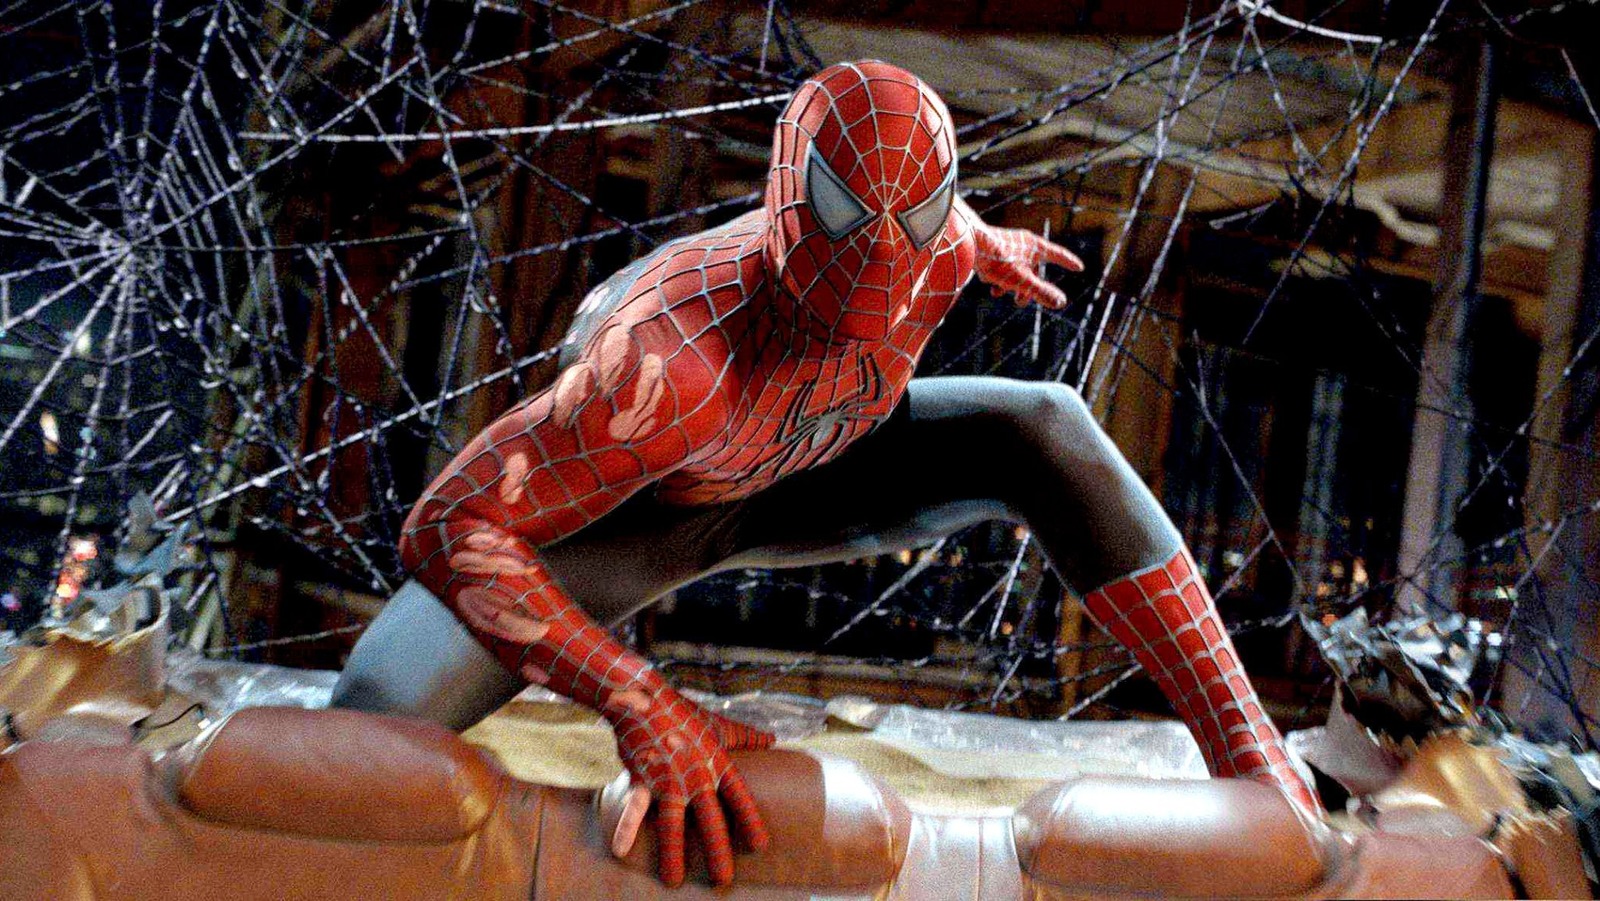 A running theme in Sam Raimi's Spider-Man villains